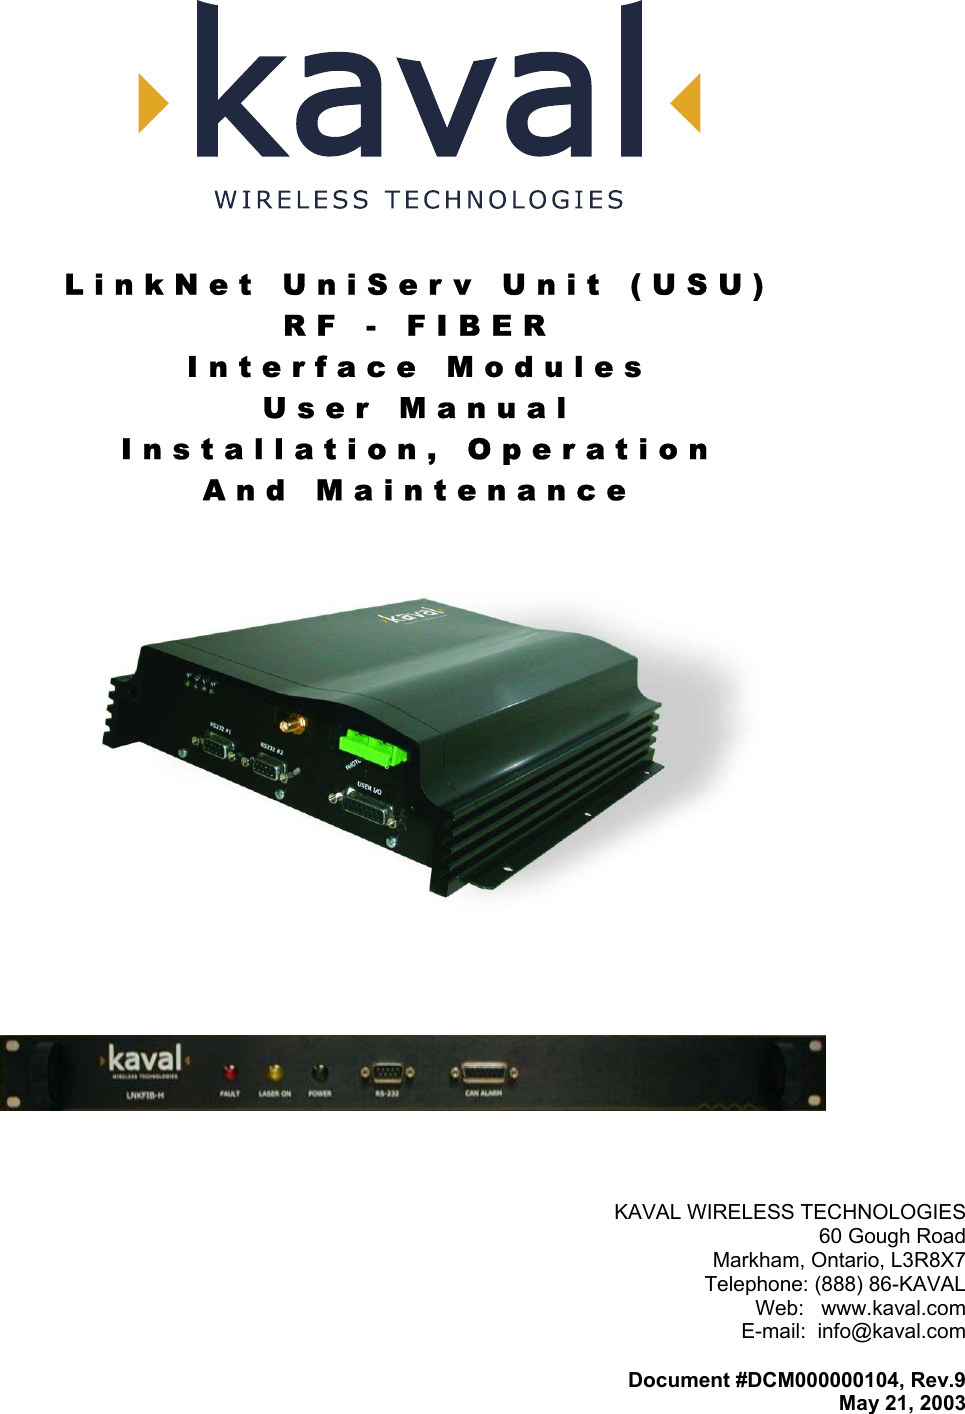   LinkNet UniServ Unit (USU) RF - FIBER Interface Modules User Manual Installation, Operation And Maintenance    KAVAL WIRELESS TECHNOLOGIES 60 Gough Road Markham, Ontario, L3R8X7 Telephone: (888) 86-KAVAL Web:   www.kaval.com E-mail:  info@kaval.com  Document #DCM000000104, Rev.9 May 21, 2003 